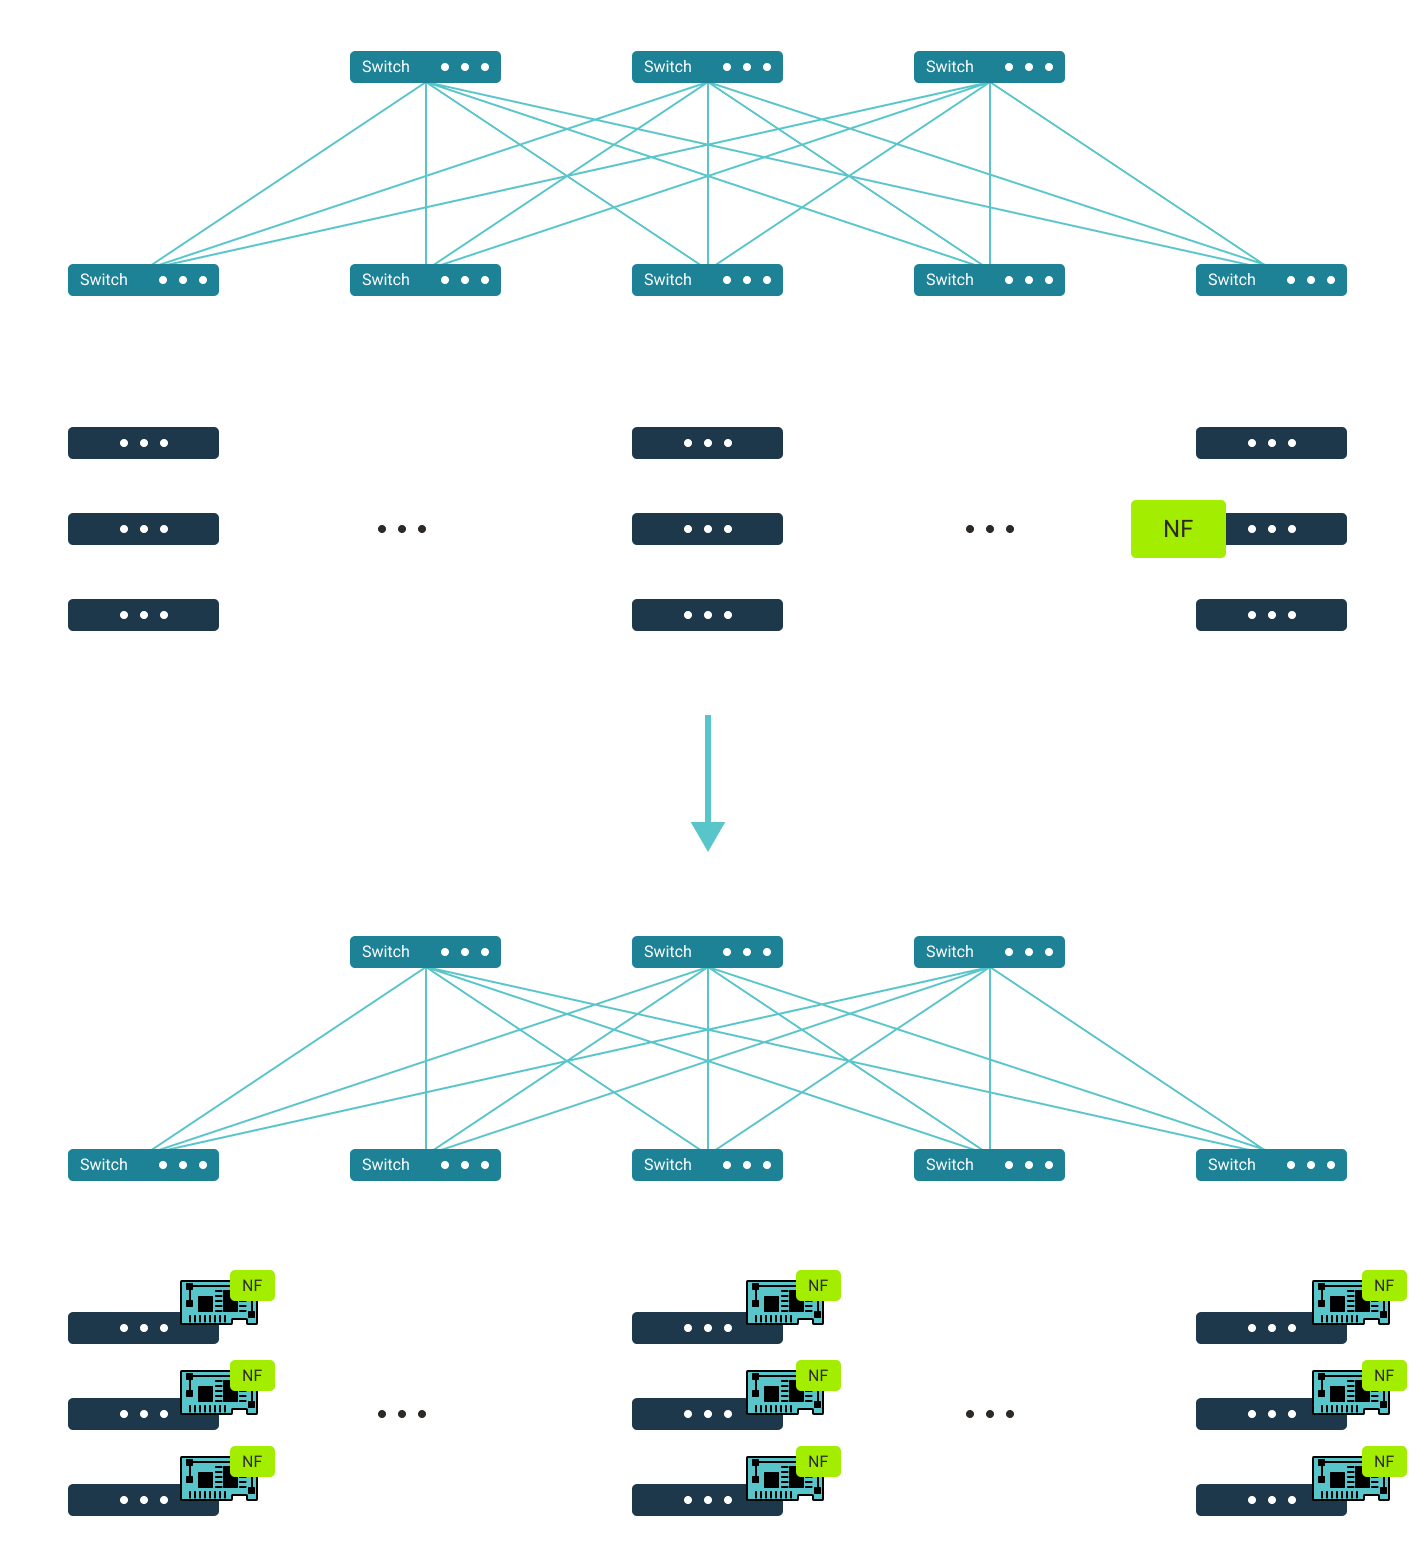 Network function distribution—to smartNICs